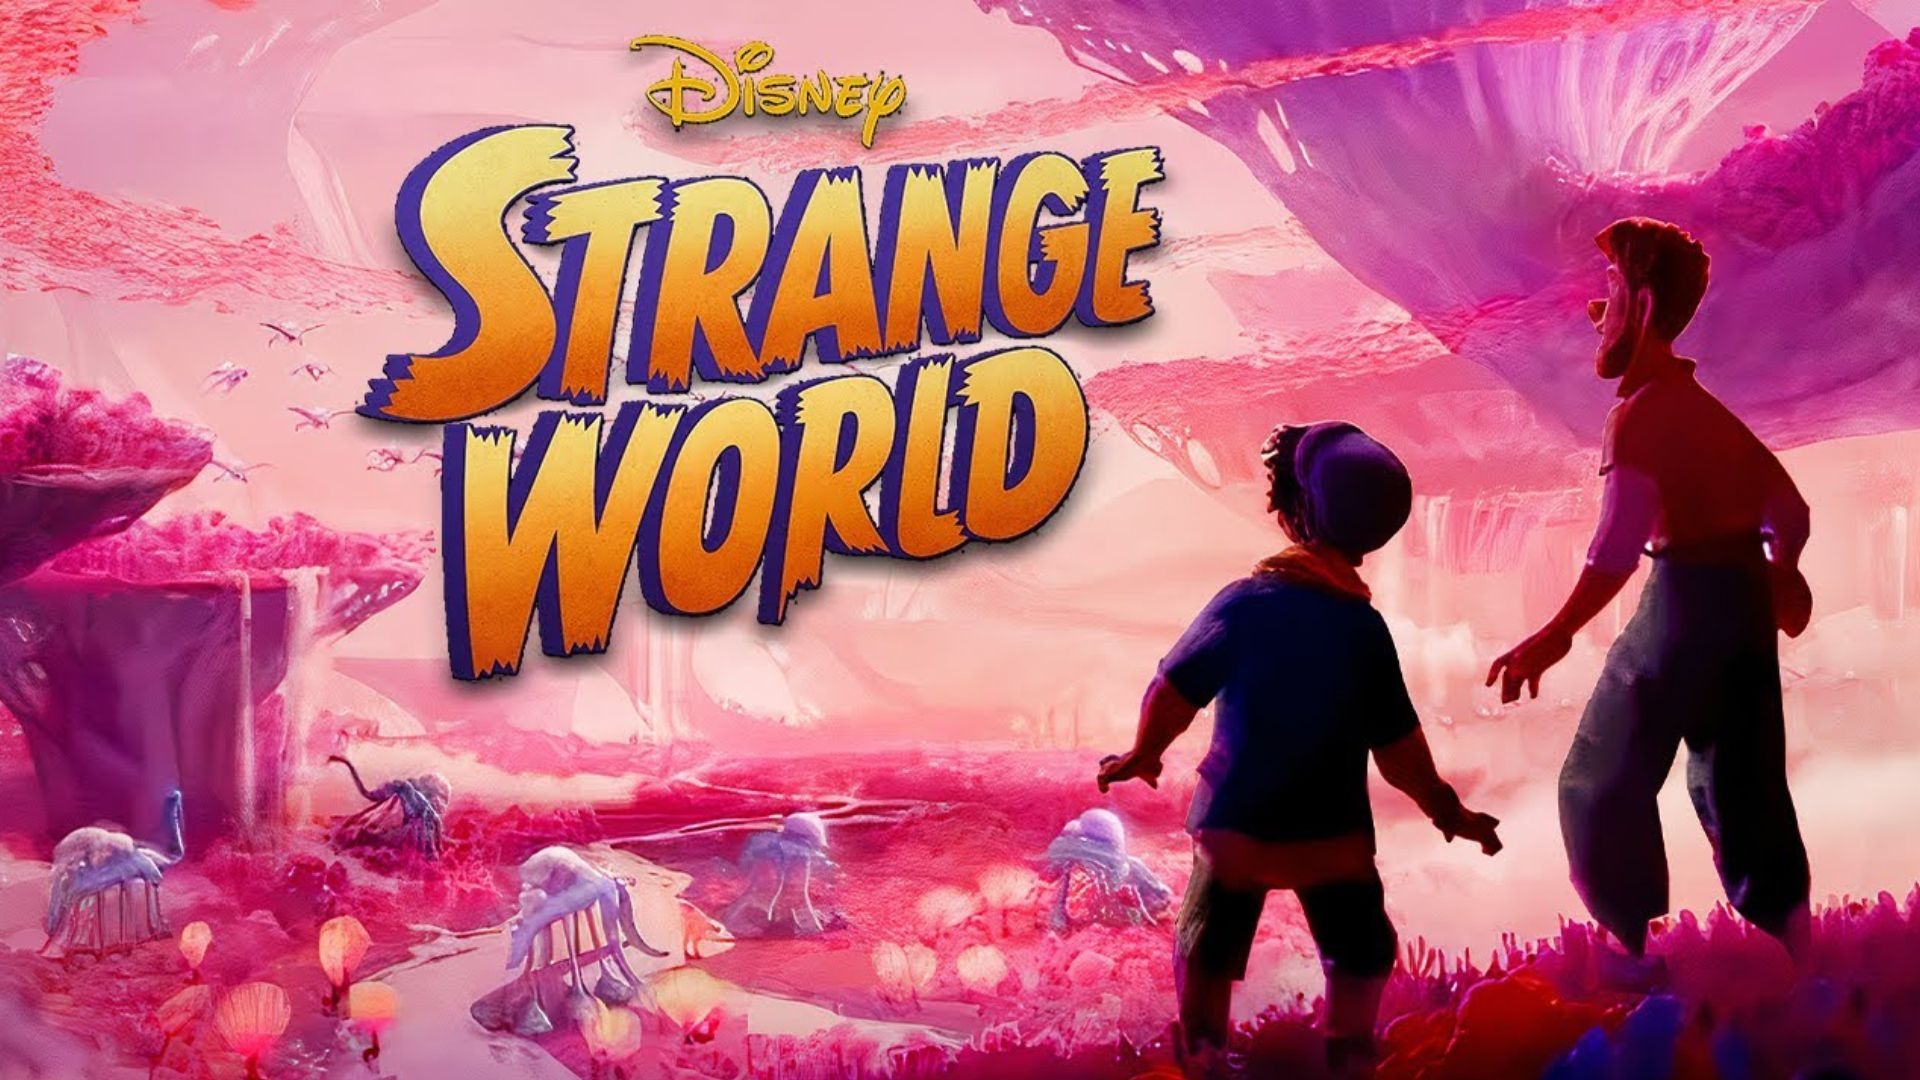 Disney's Strange World, Bande annonce, French film news, Upcoming animated adventure, 1920x1080 Full HD Desktop